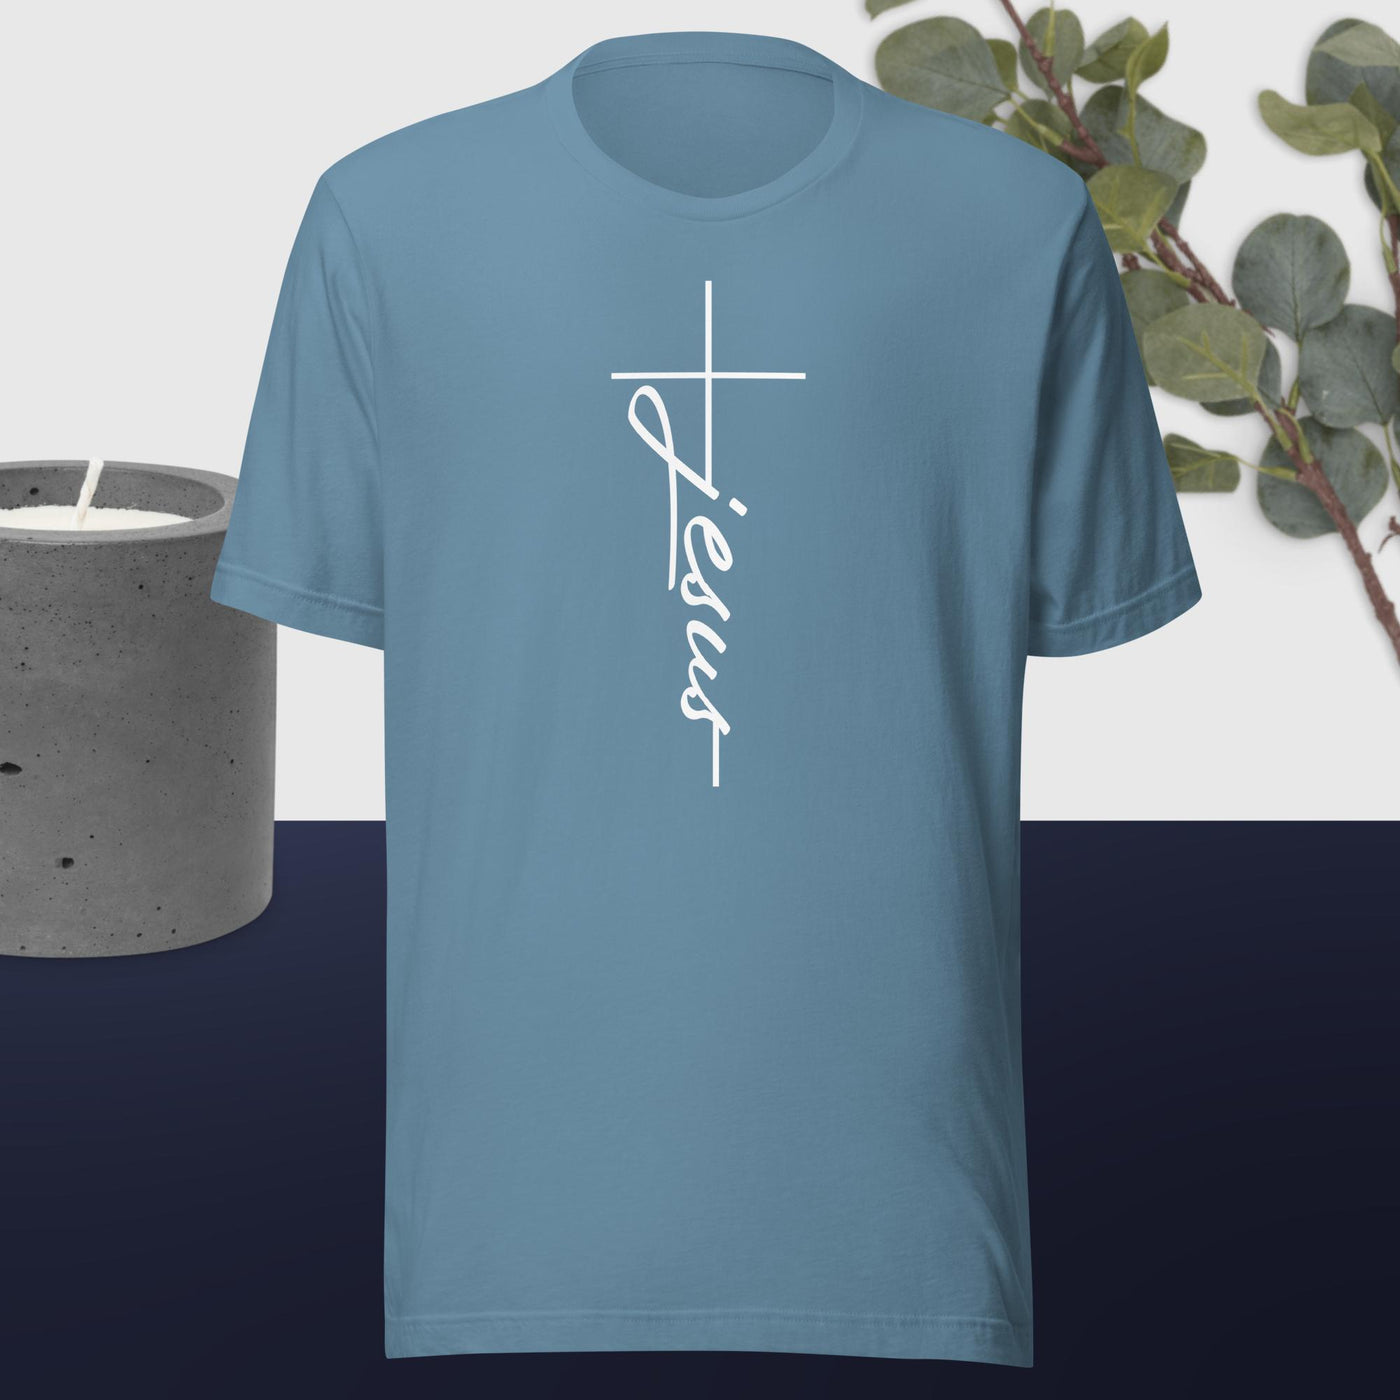 F&H Jesus on the Cross t-shirt